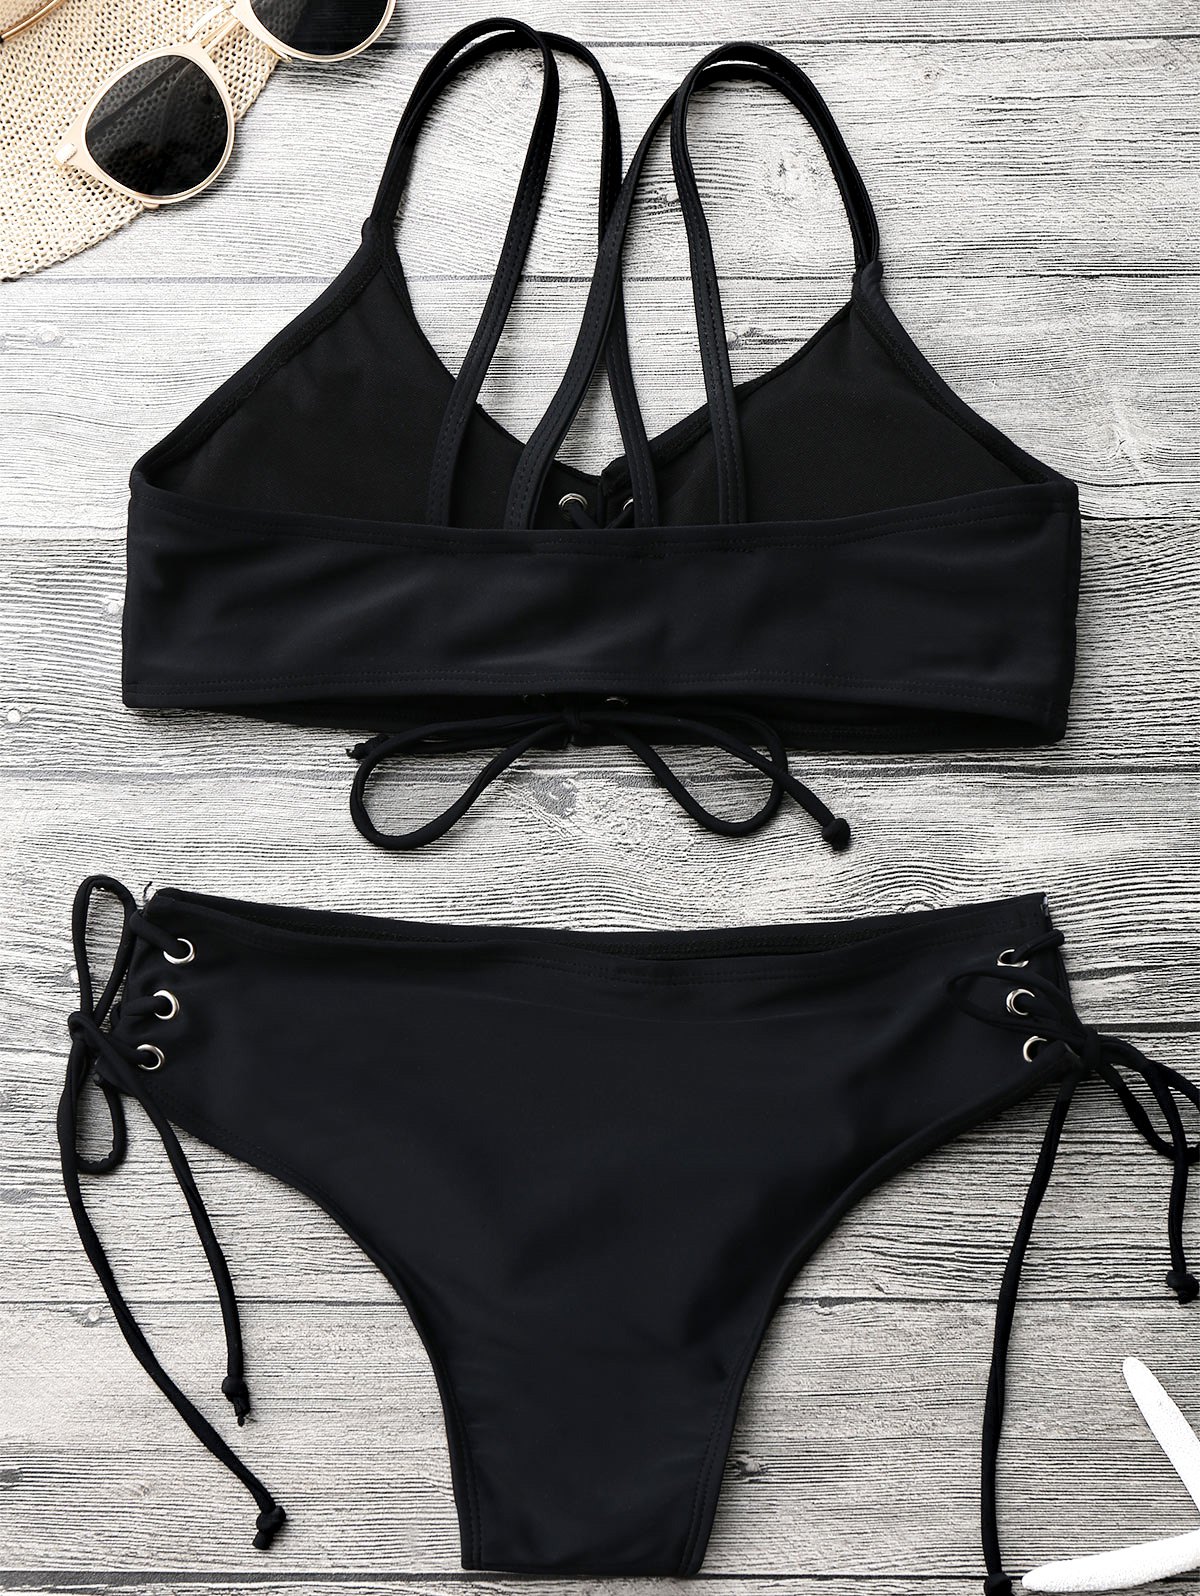 Strappy Lace Up Bralette Bikini Set - Black S on Luulla